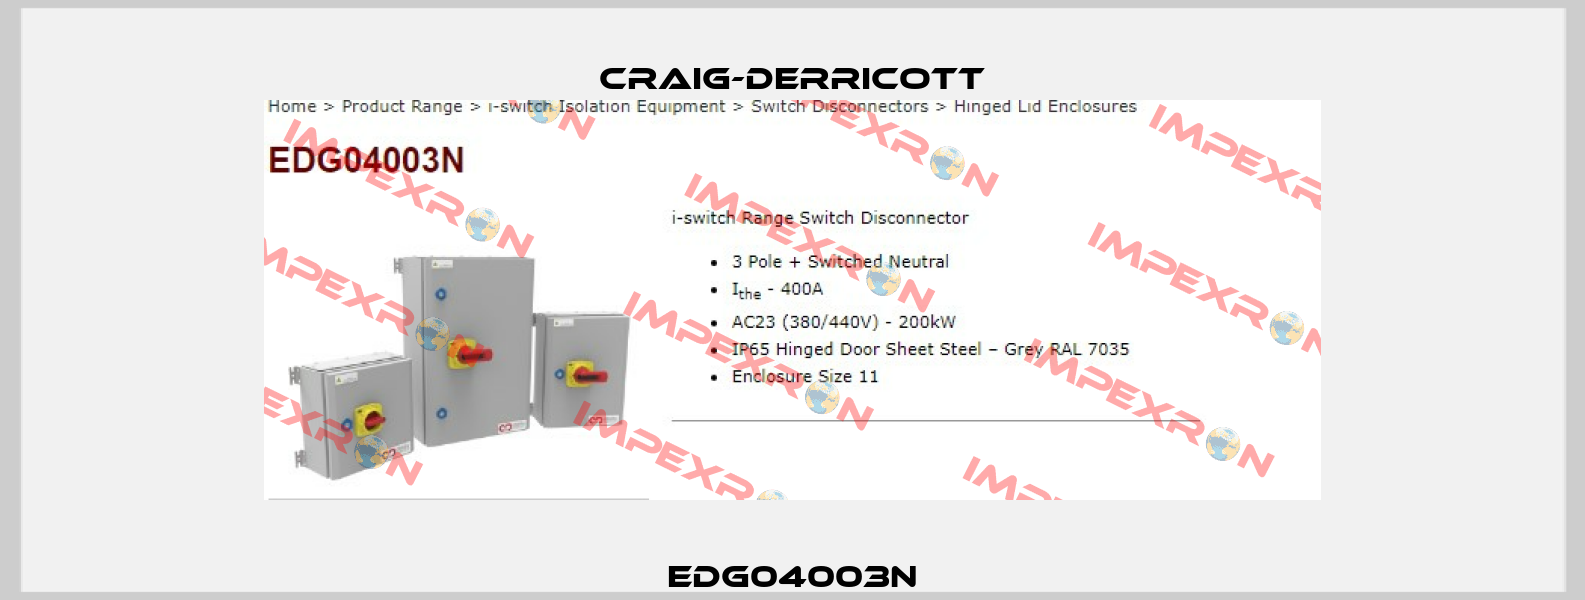 EDG04003N Craig-Derricott